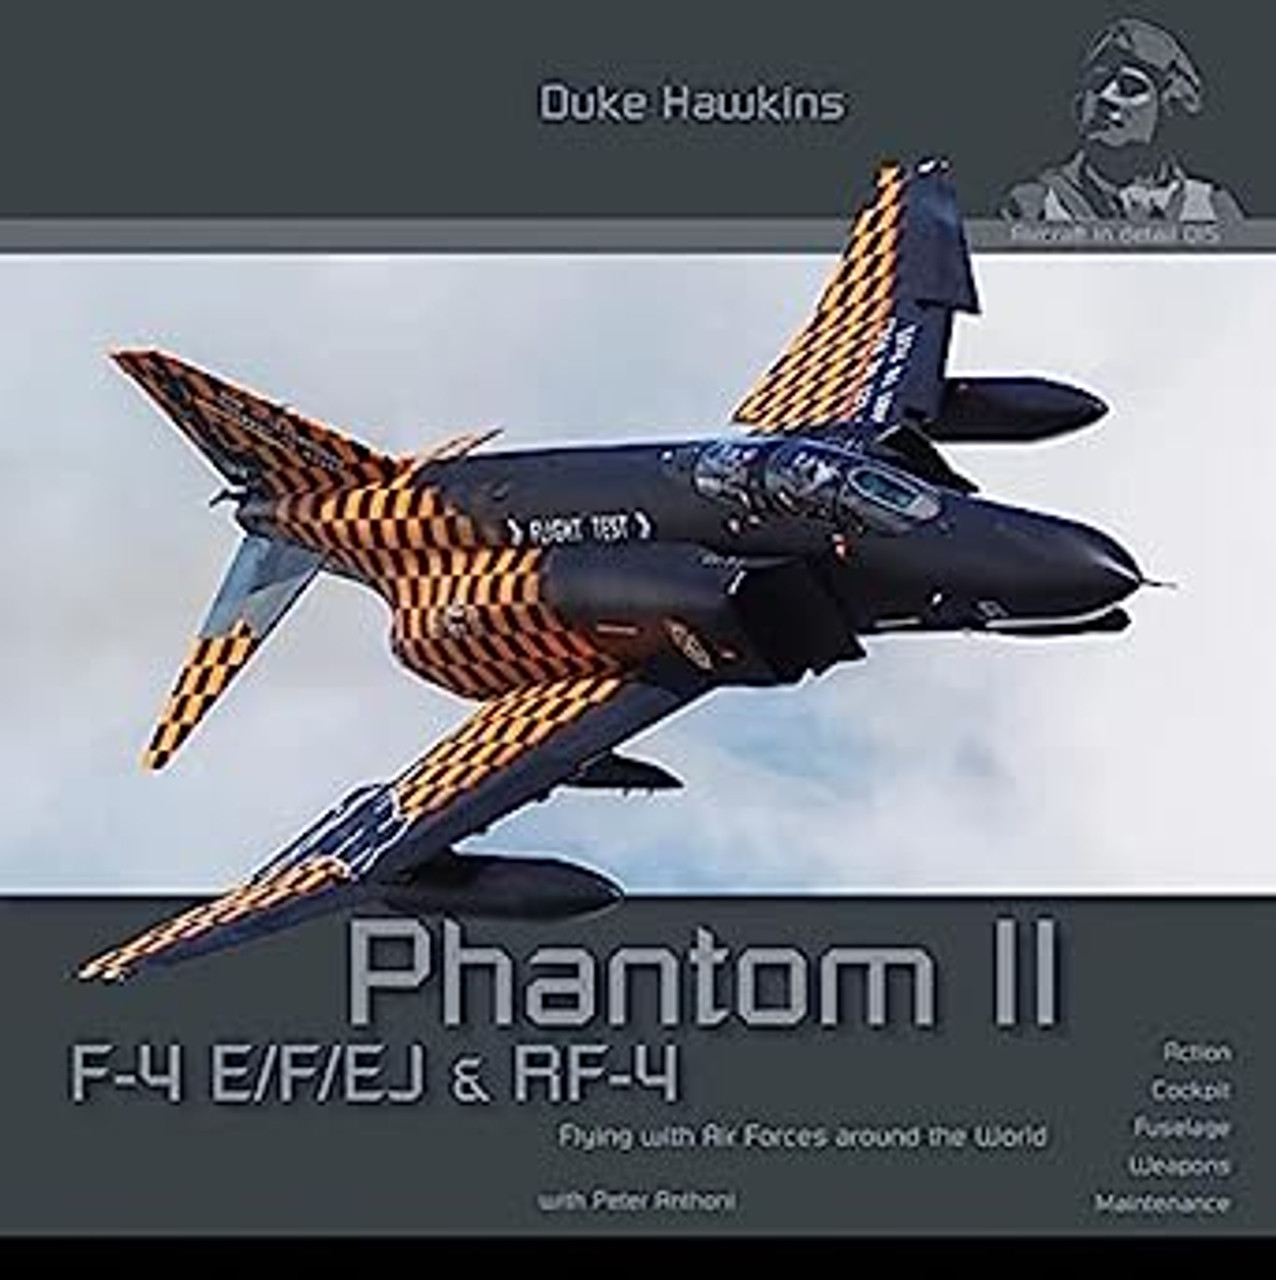 Aircraft in Detail 015: F-4 E/F/EJ & RF-4 Phantom II